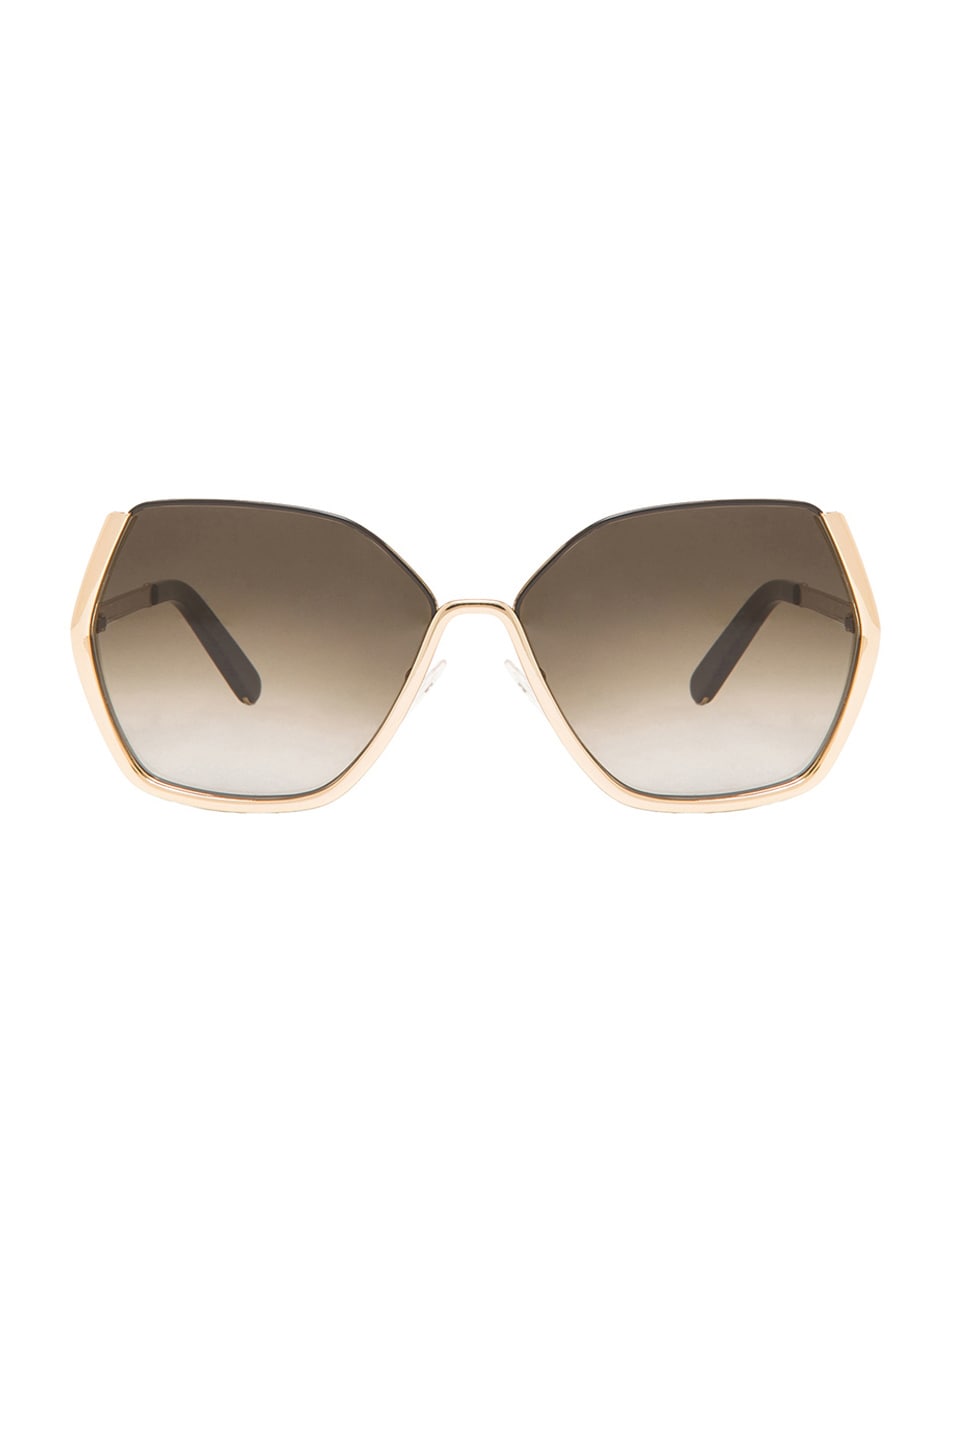 Chloe Danae Sunglasses in Gold & Black | FWRD